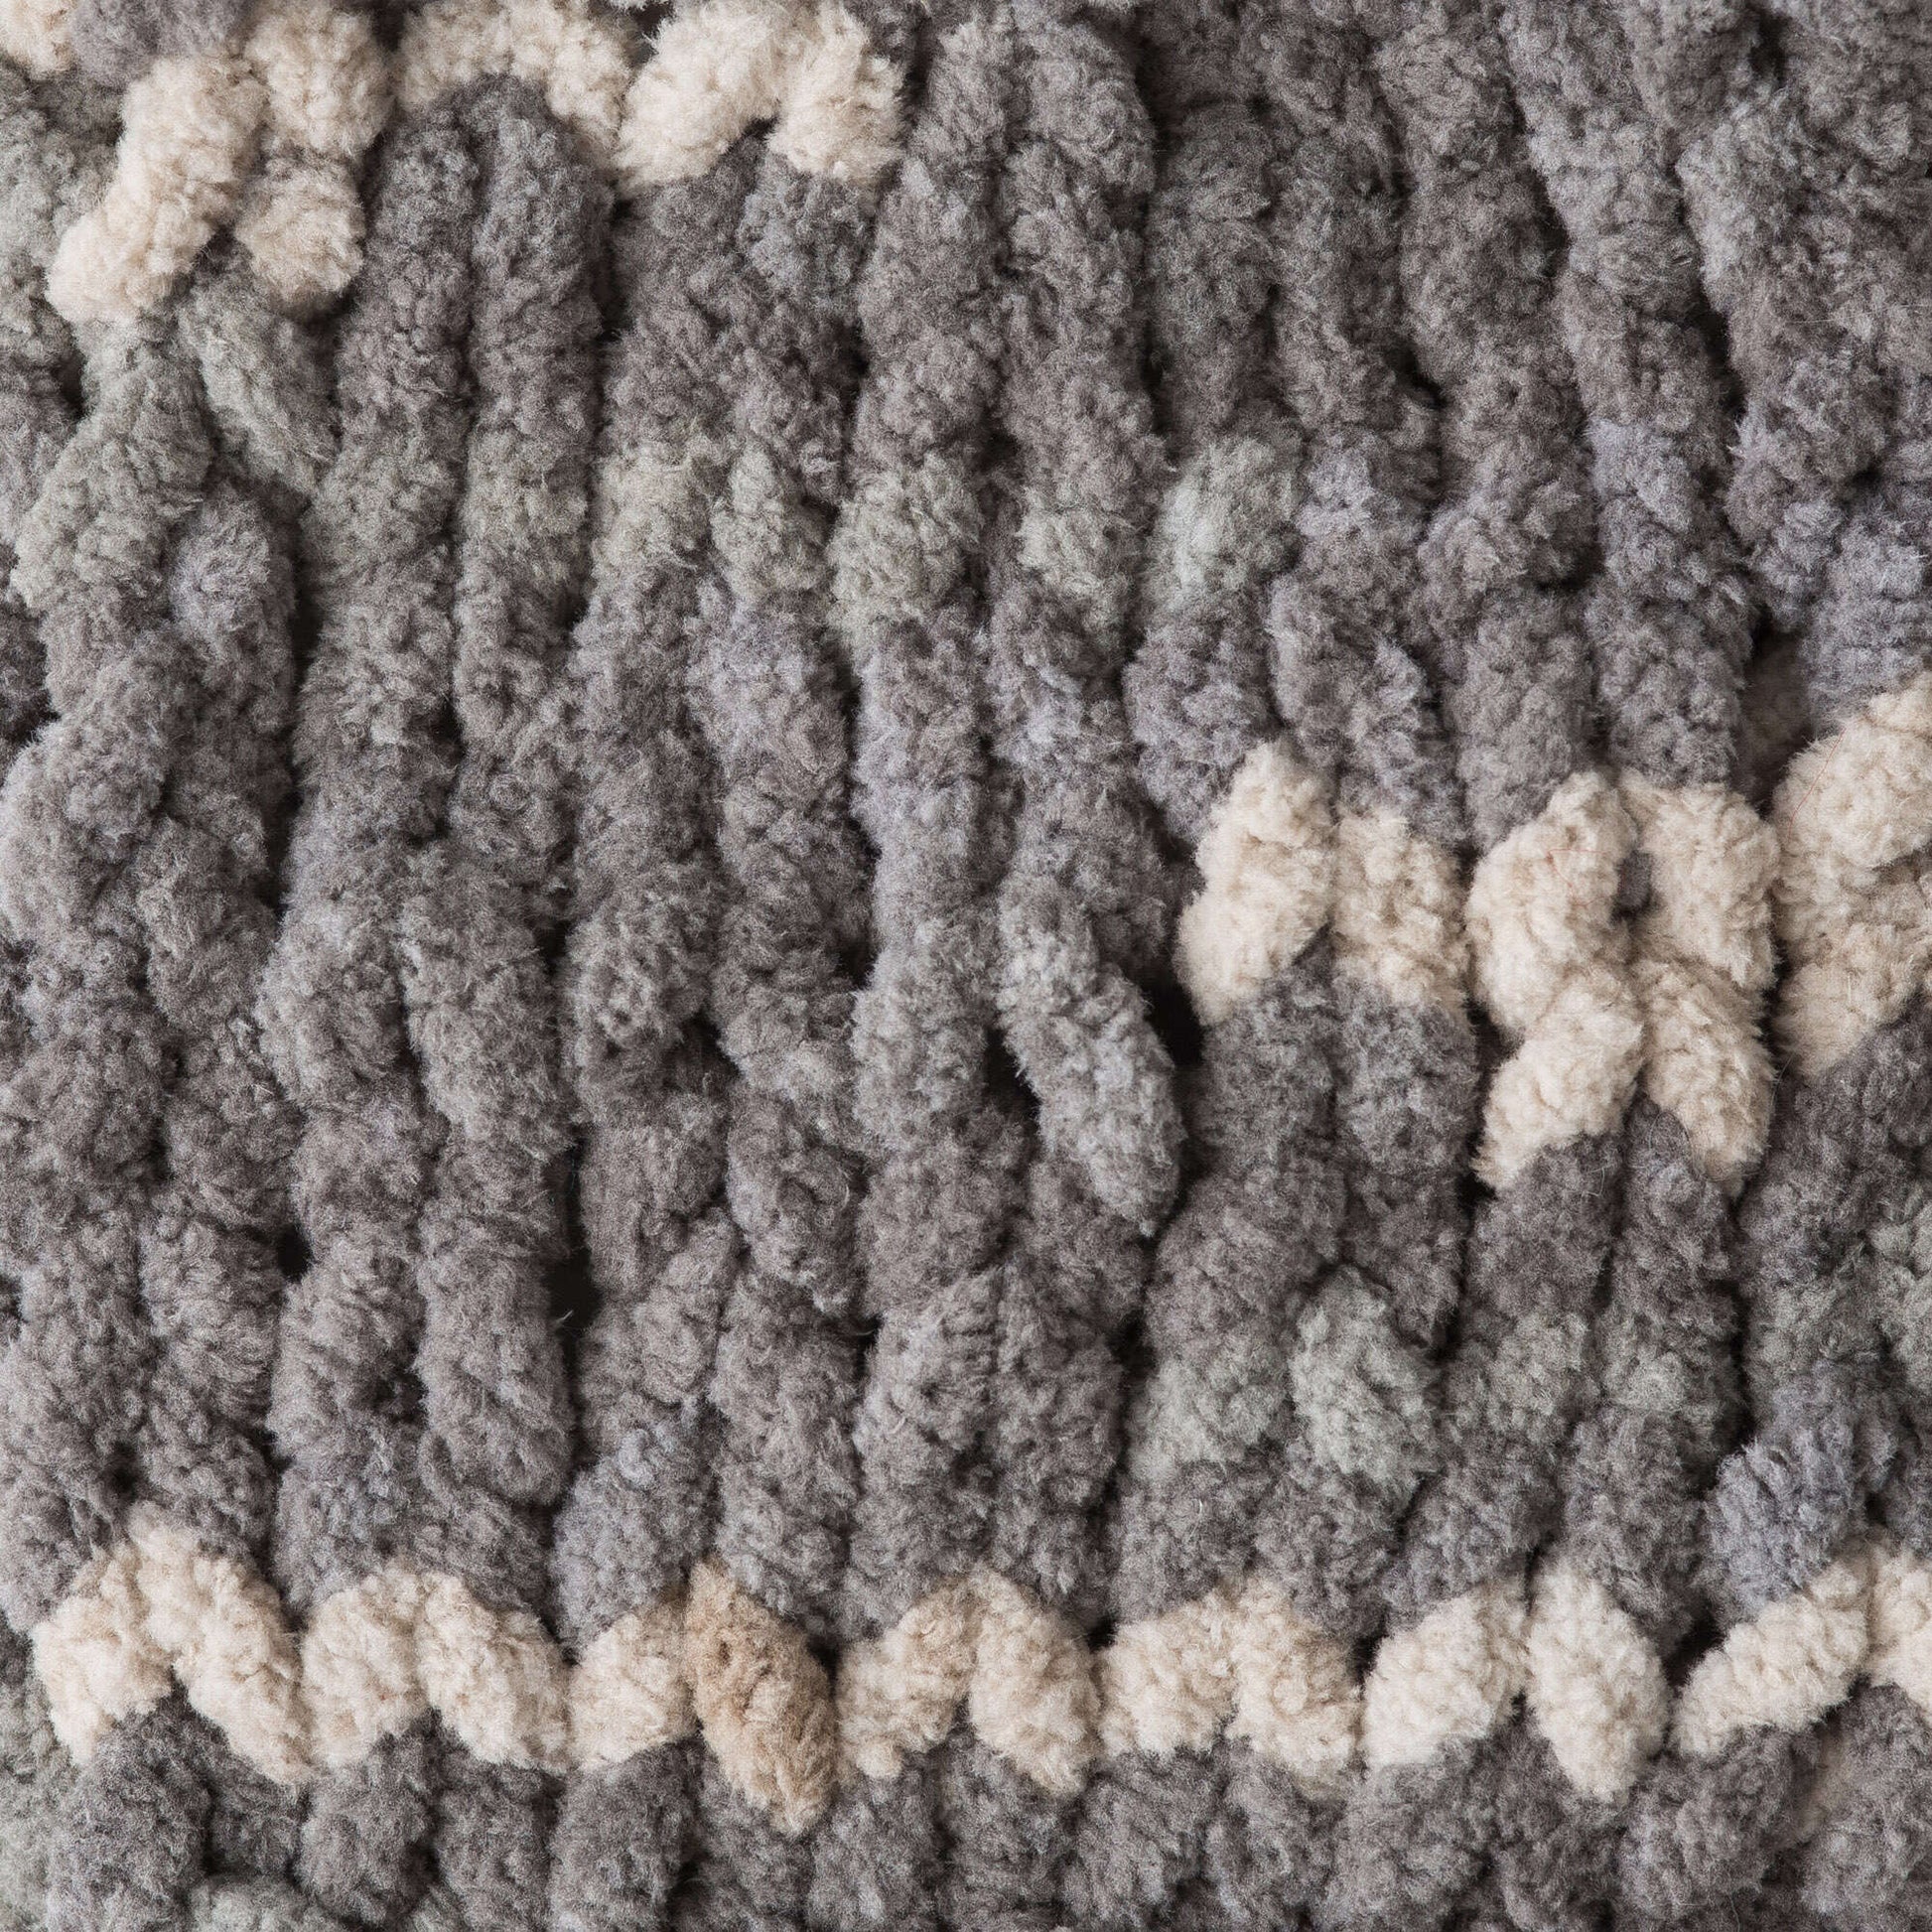 Bernat Blanket Bigger Yarn (600gr/21.2oz) in Sage | Size: 600g/21.2oz | by Yarnspirations